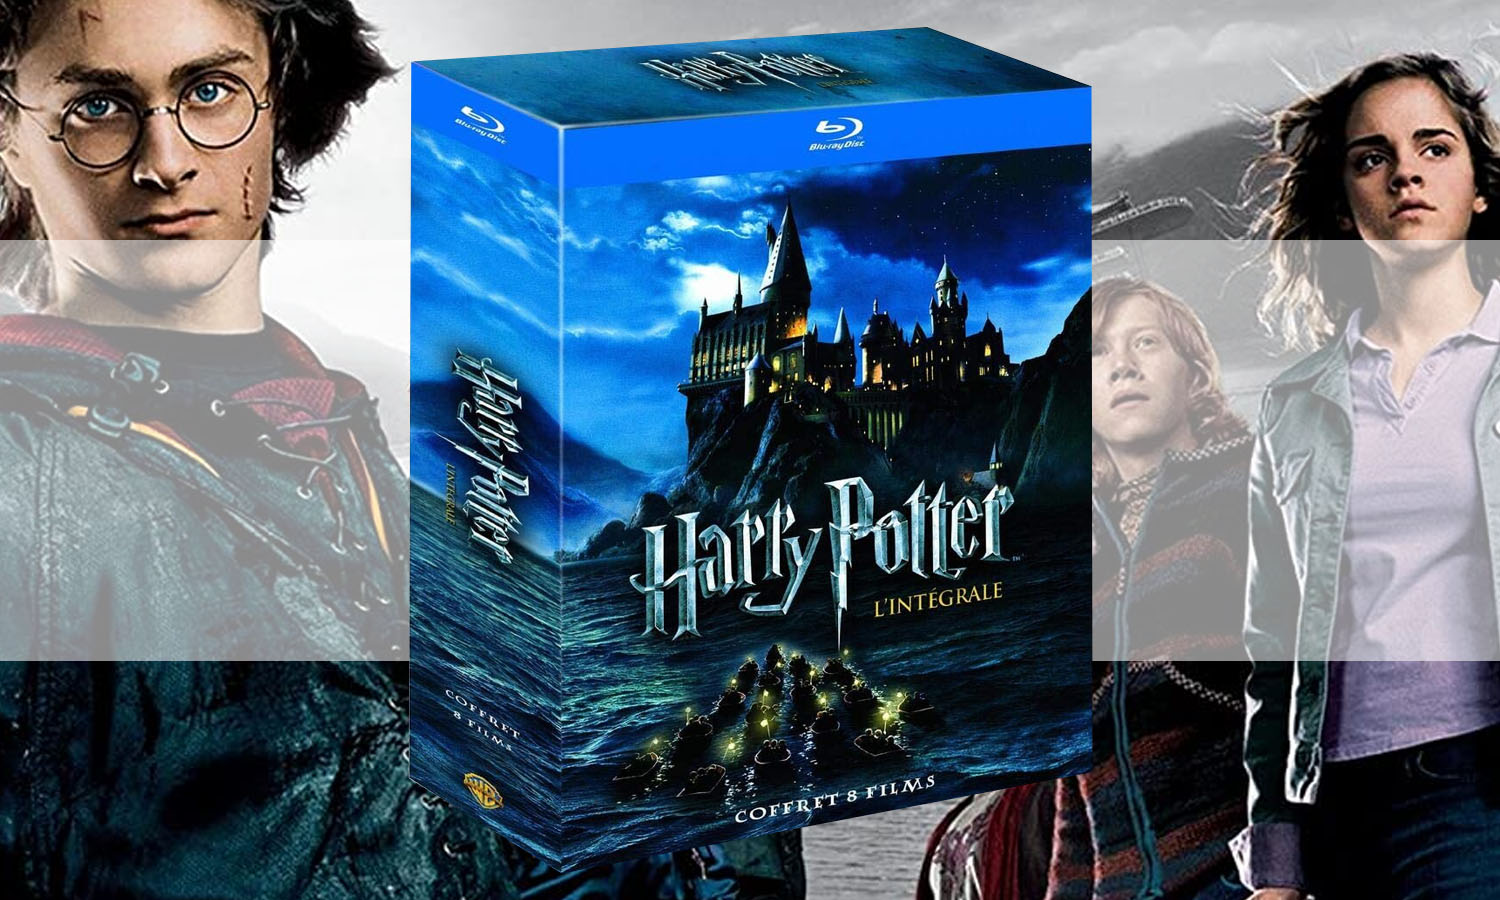 Harry Potter intégrale blu ray pas cher à 19 euros